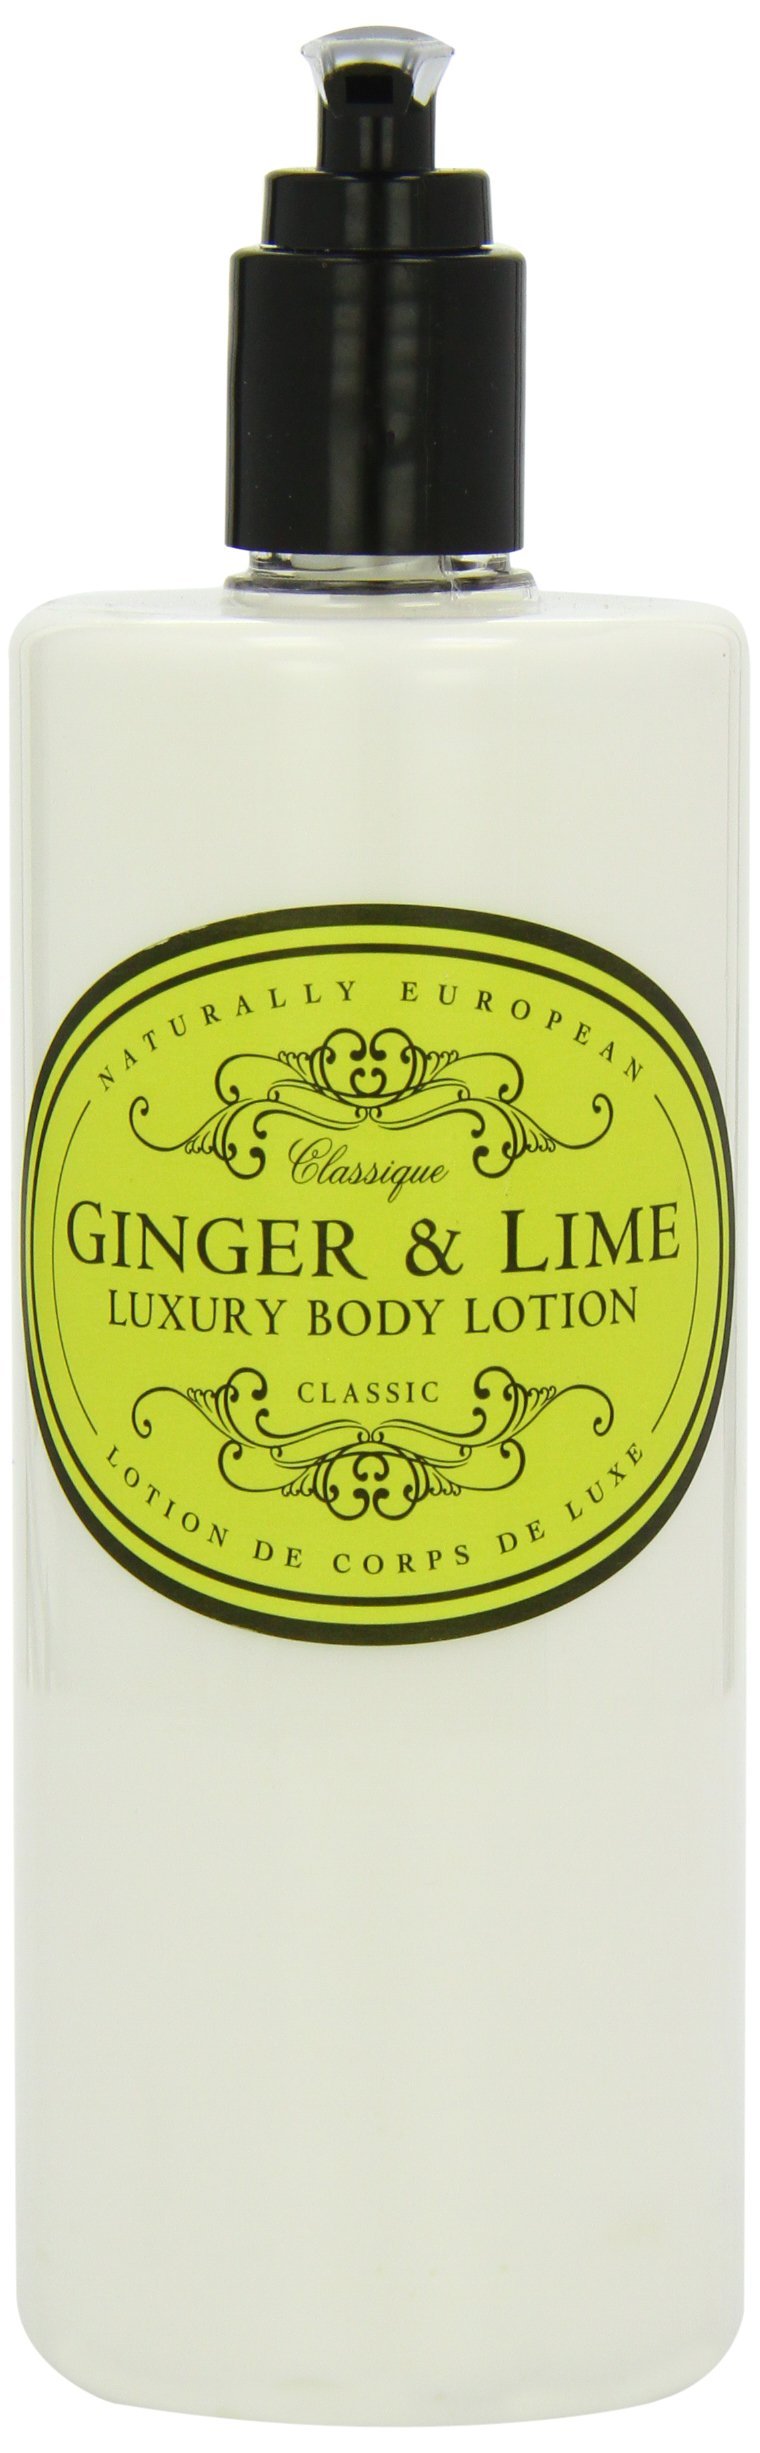 Naturally European Ginger & Lime Luxury Body Lotion, 500 Ml / 17 Oz - BeesActive Australia